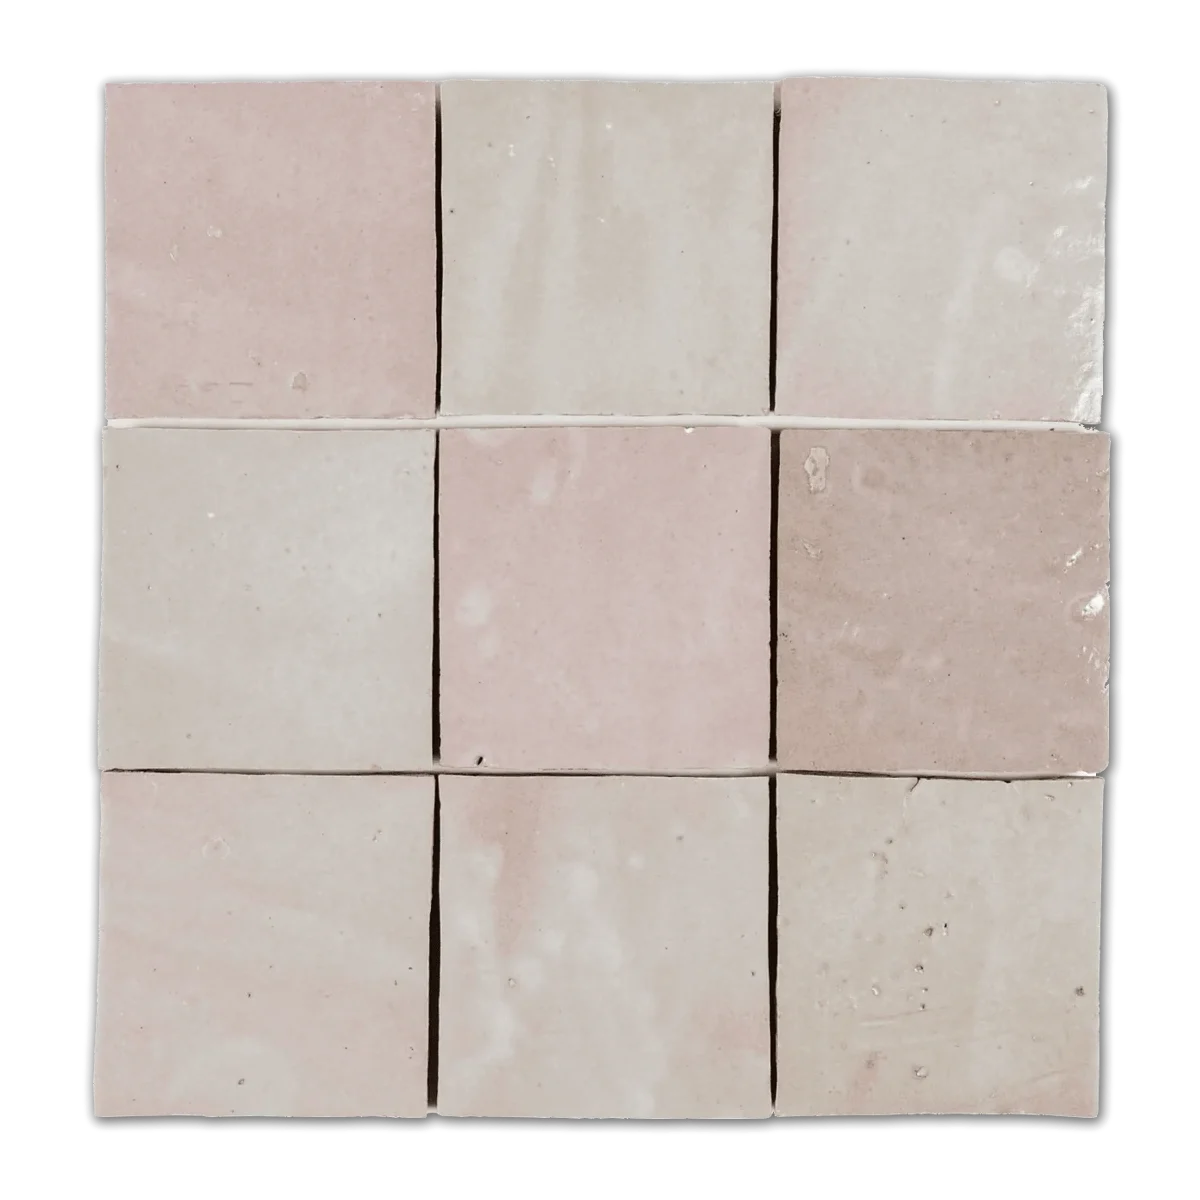 Rosaline Zellige Ceramic Wall Tile 4x4